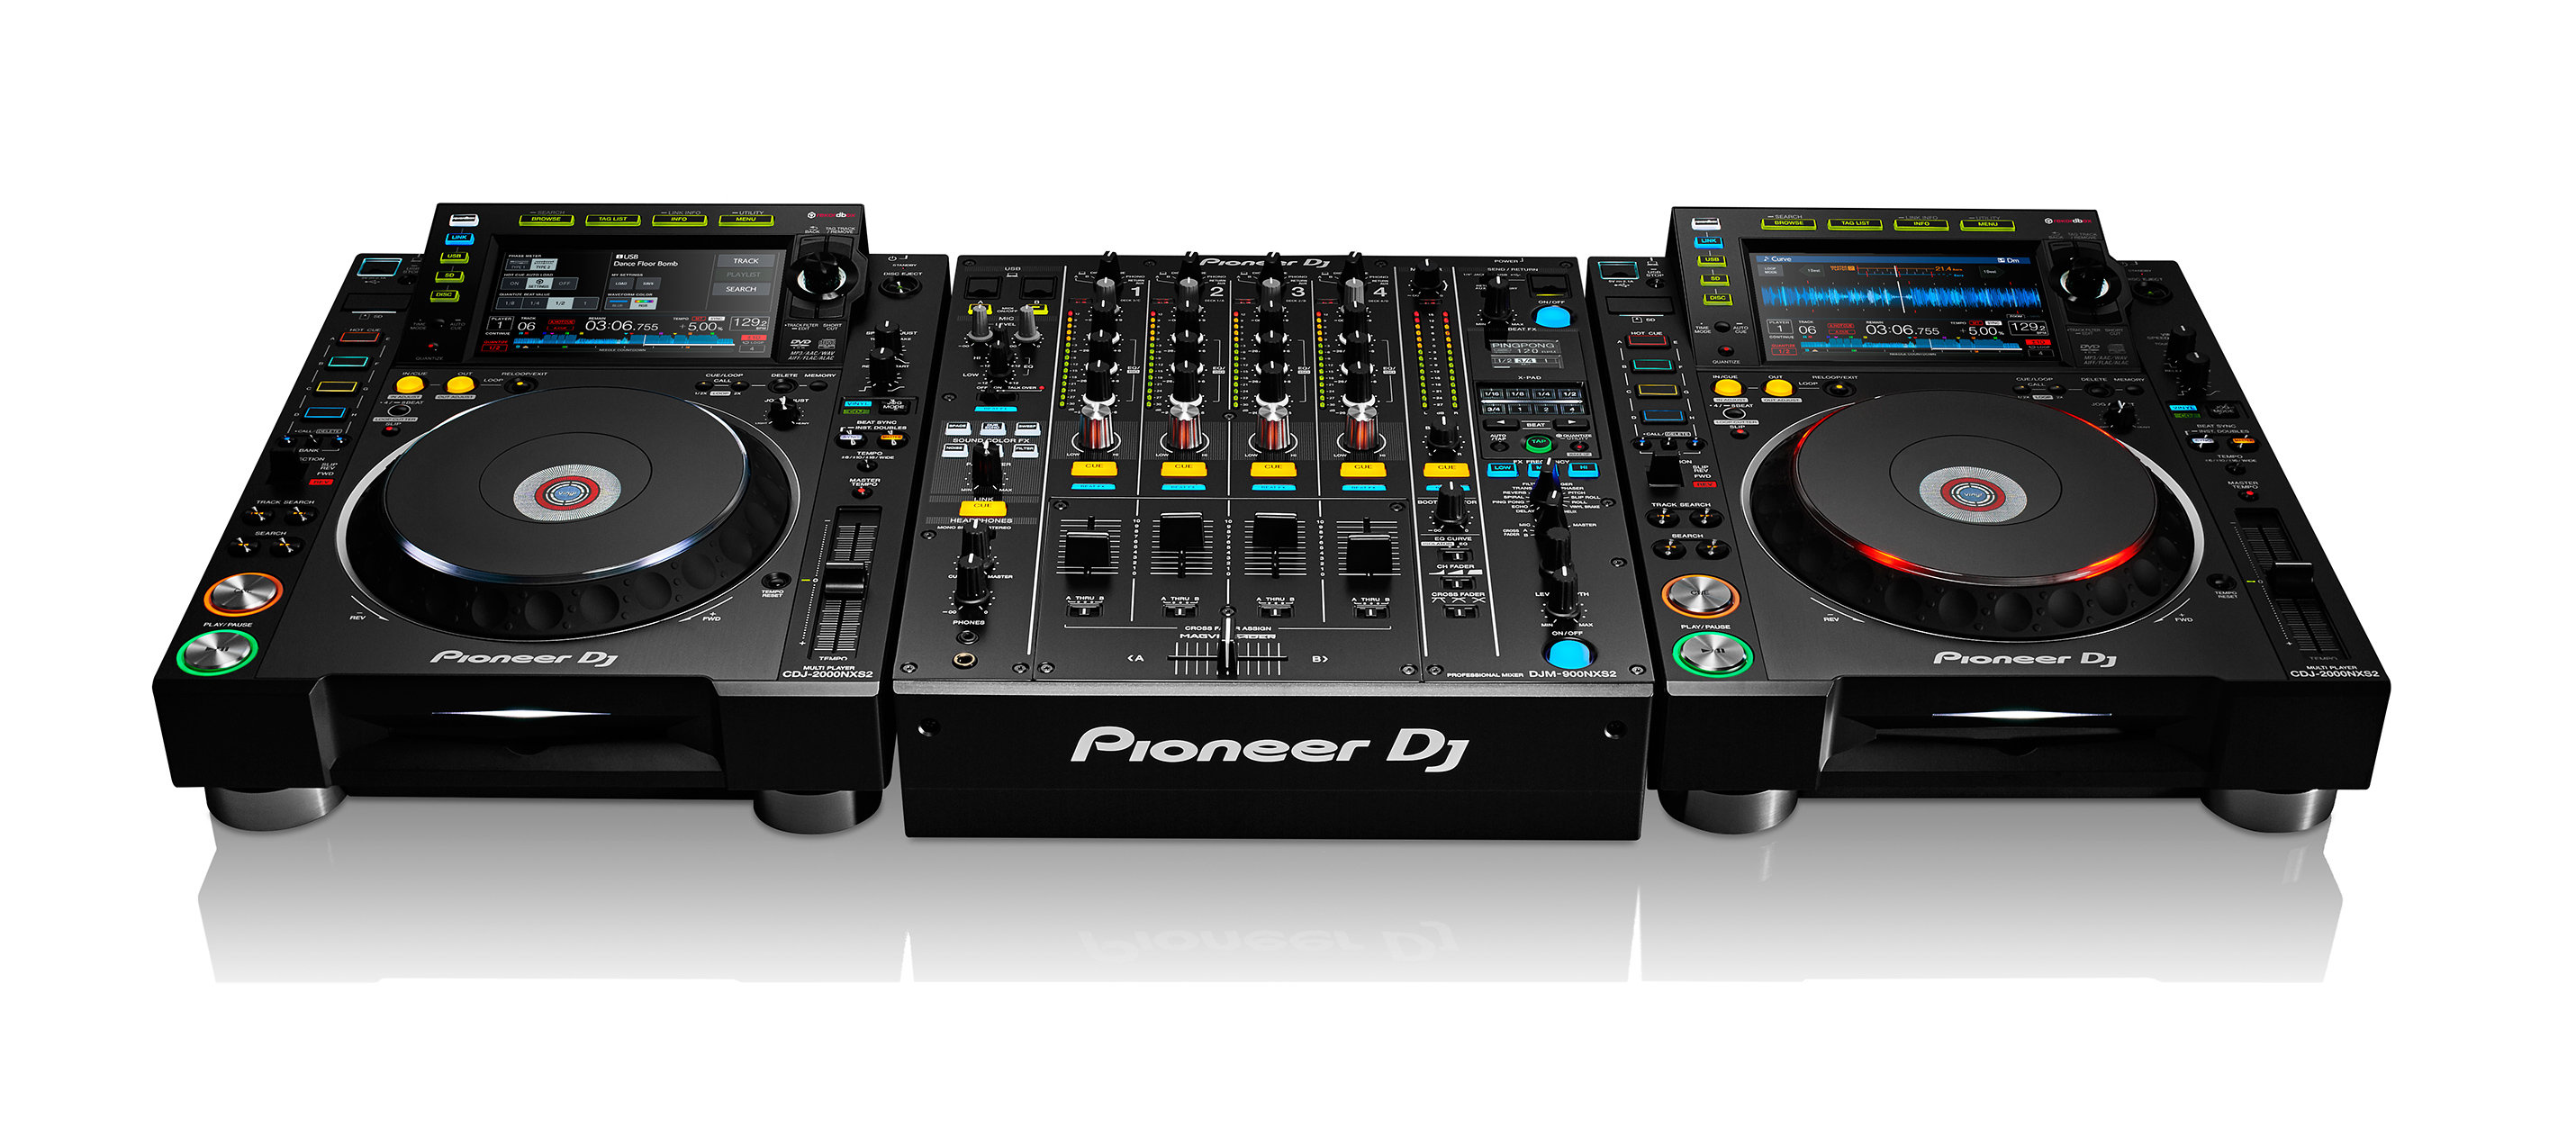 Location platine CDJ 350 Pioneer DJ - ABLE events